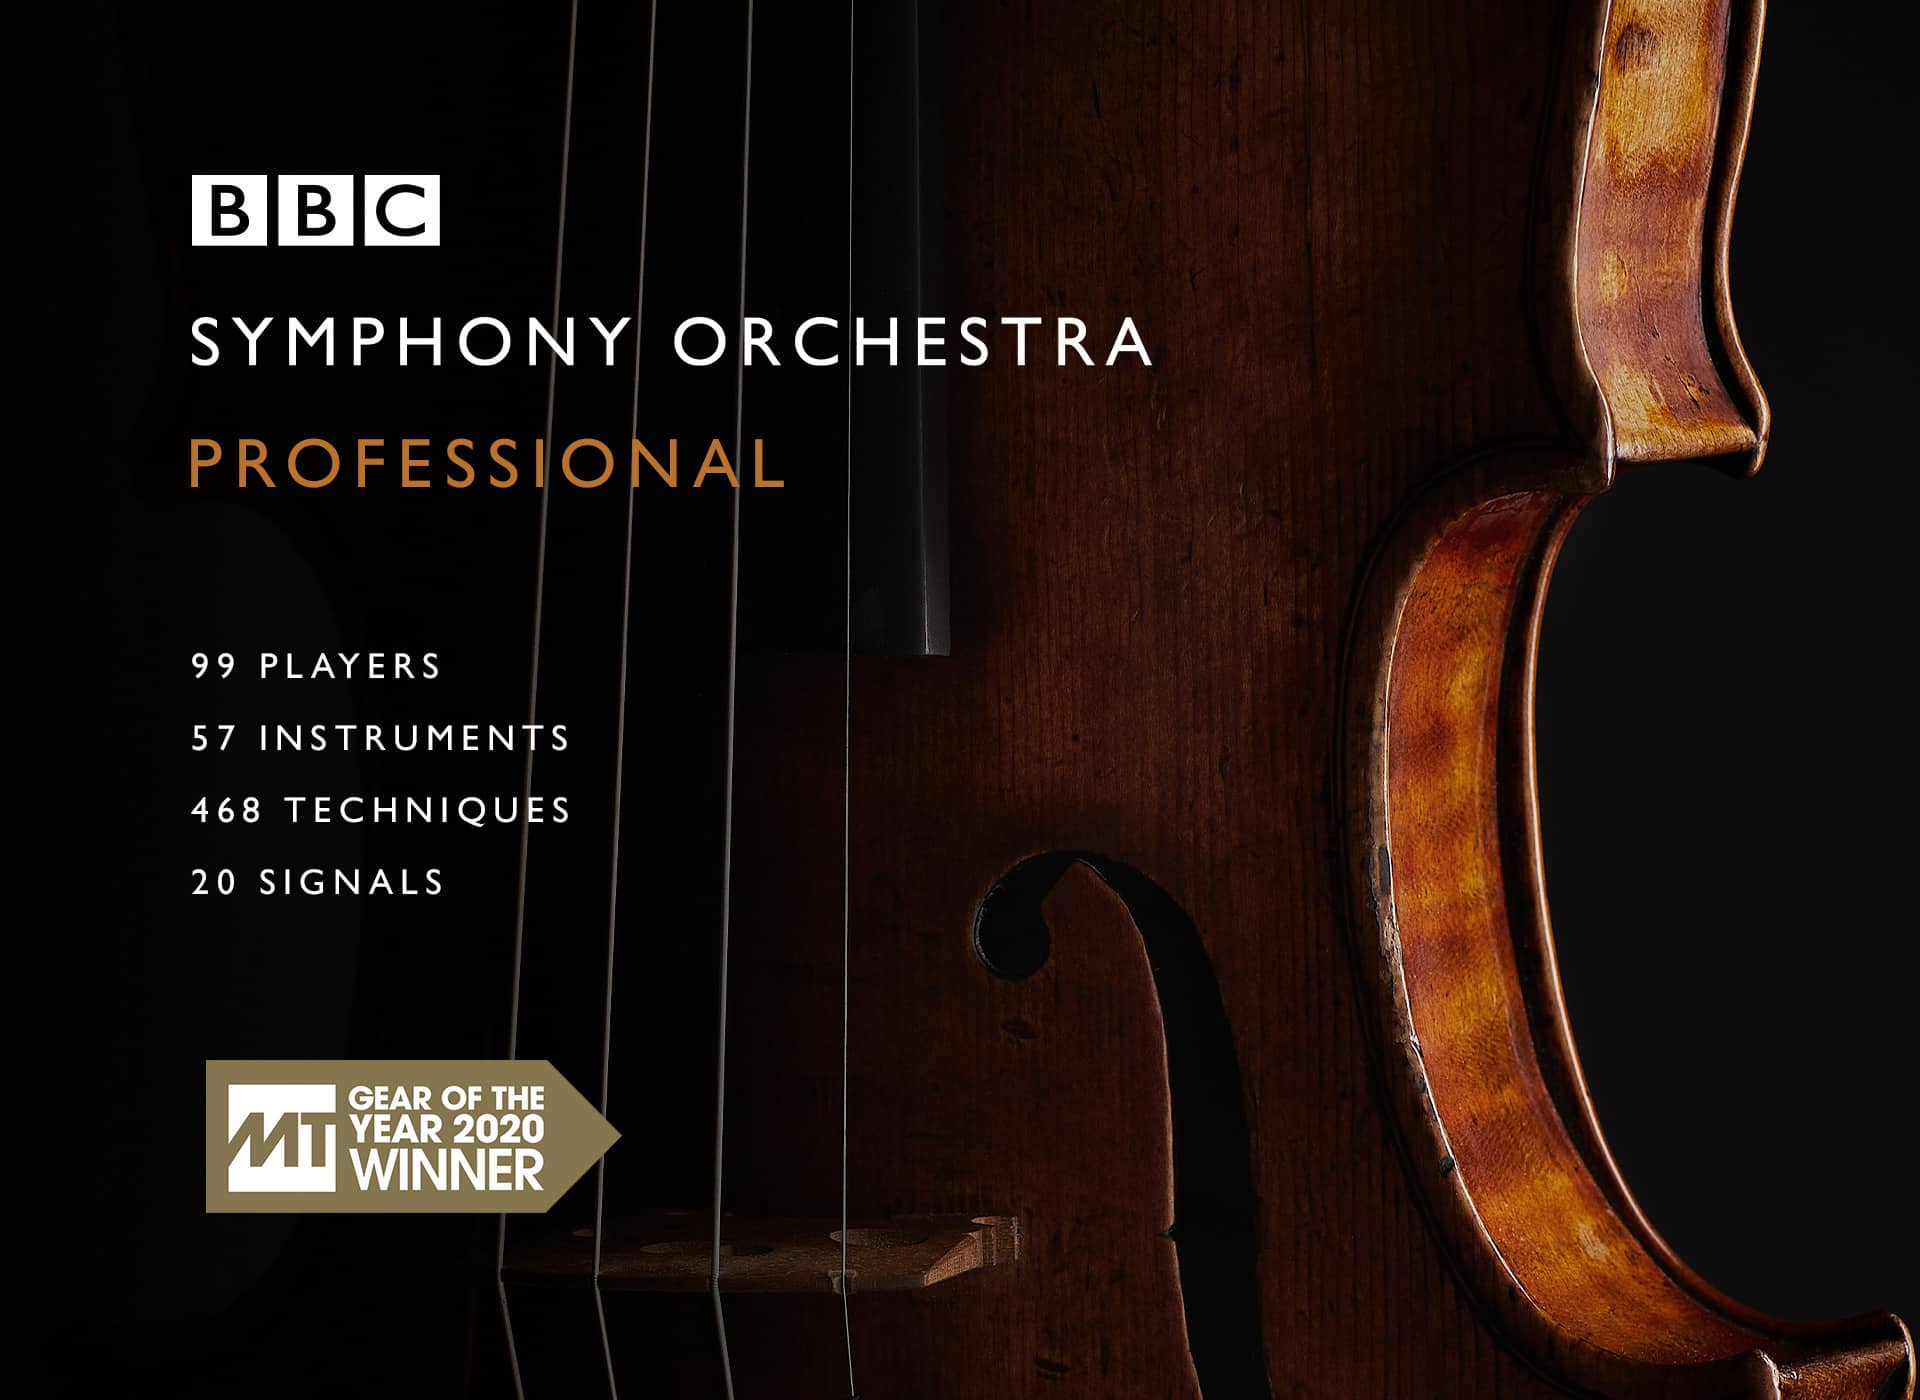 Spitfire-Updates-BBC-Symphony-Orchestra-Professional-1.2.0-pro_header-mt